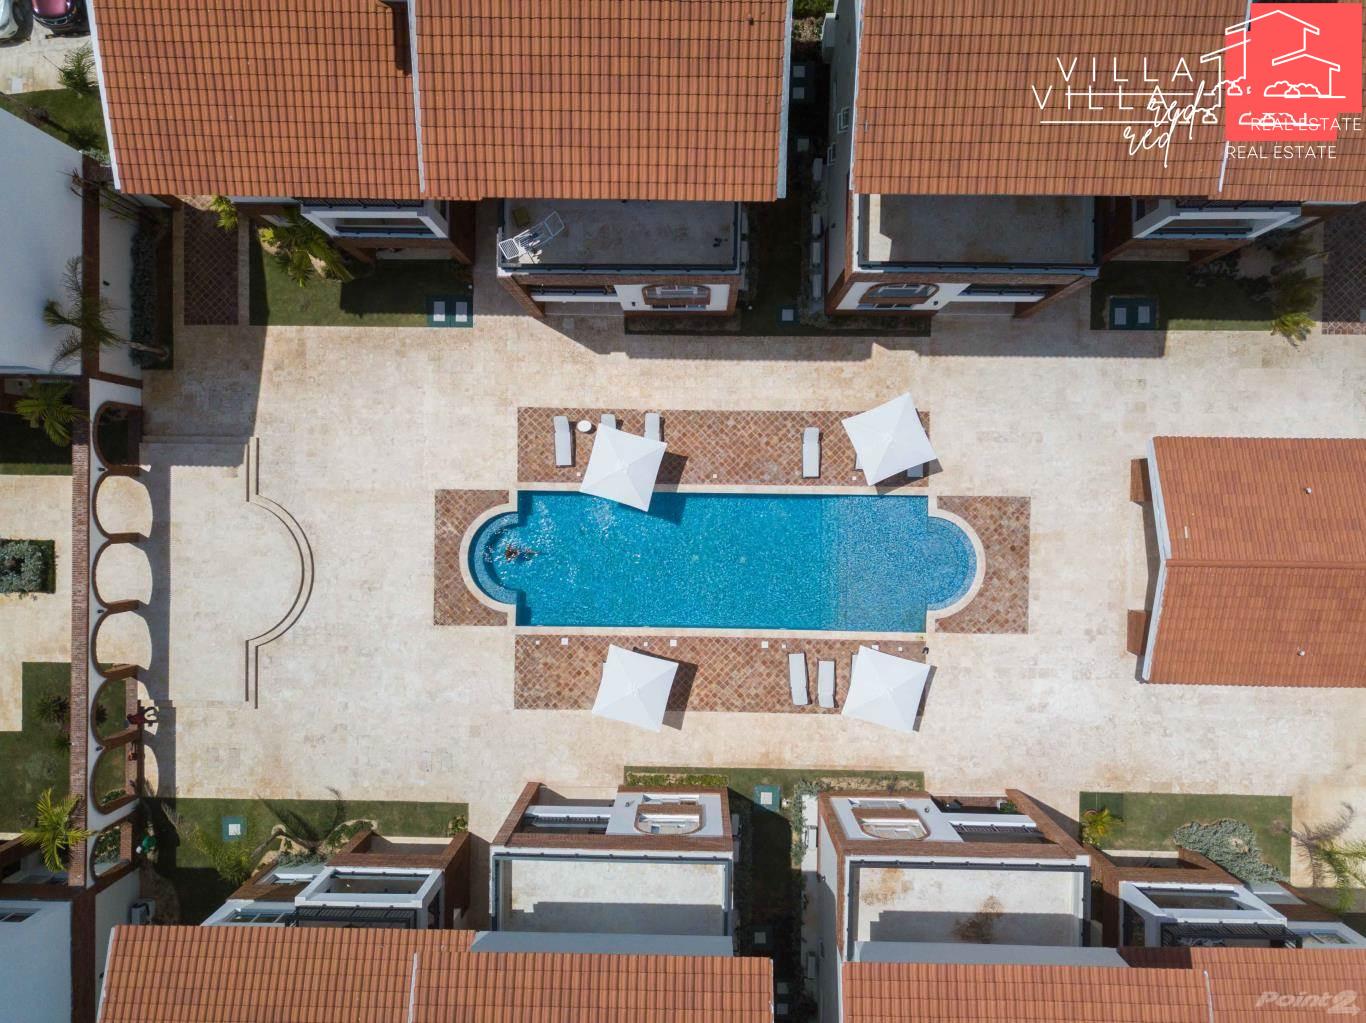 Villa.red Charming Condo With Excellent Location in CORAL VILLAGE Bavaro https://villa.red/property/charming-condo-with-excellent-location-in-coral-village-bavaro